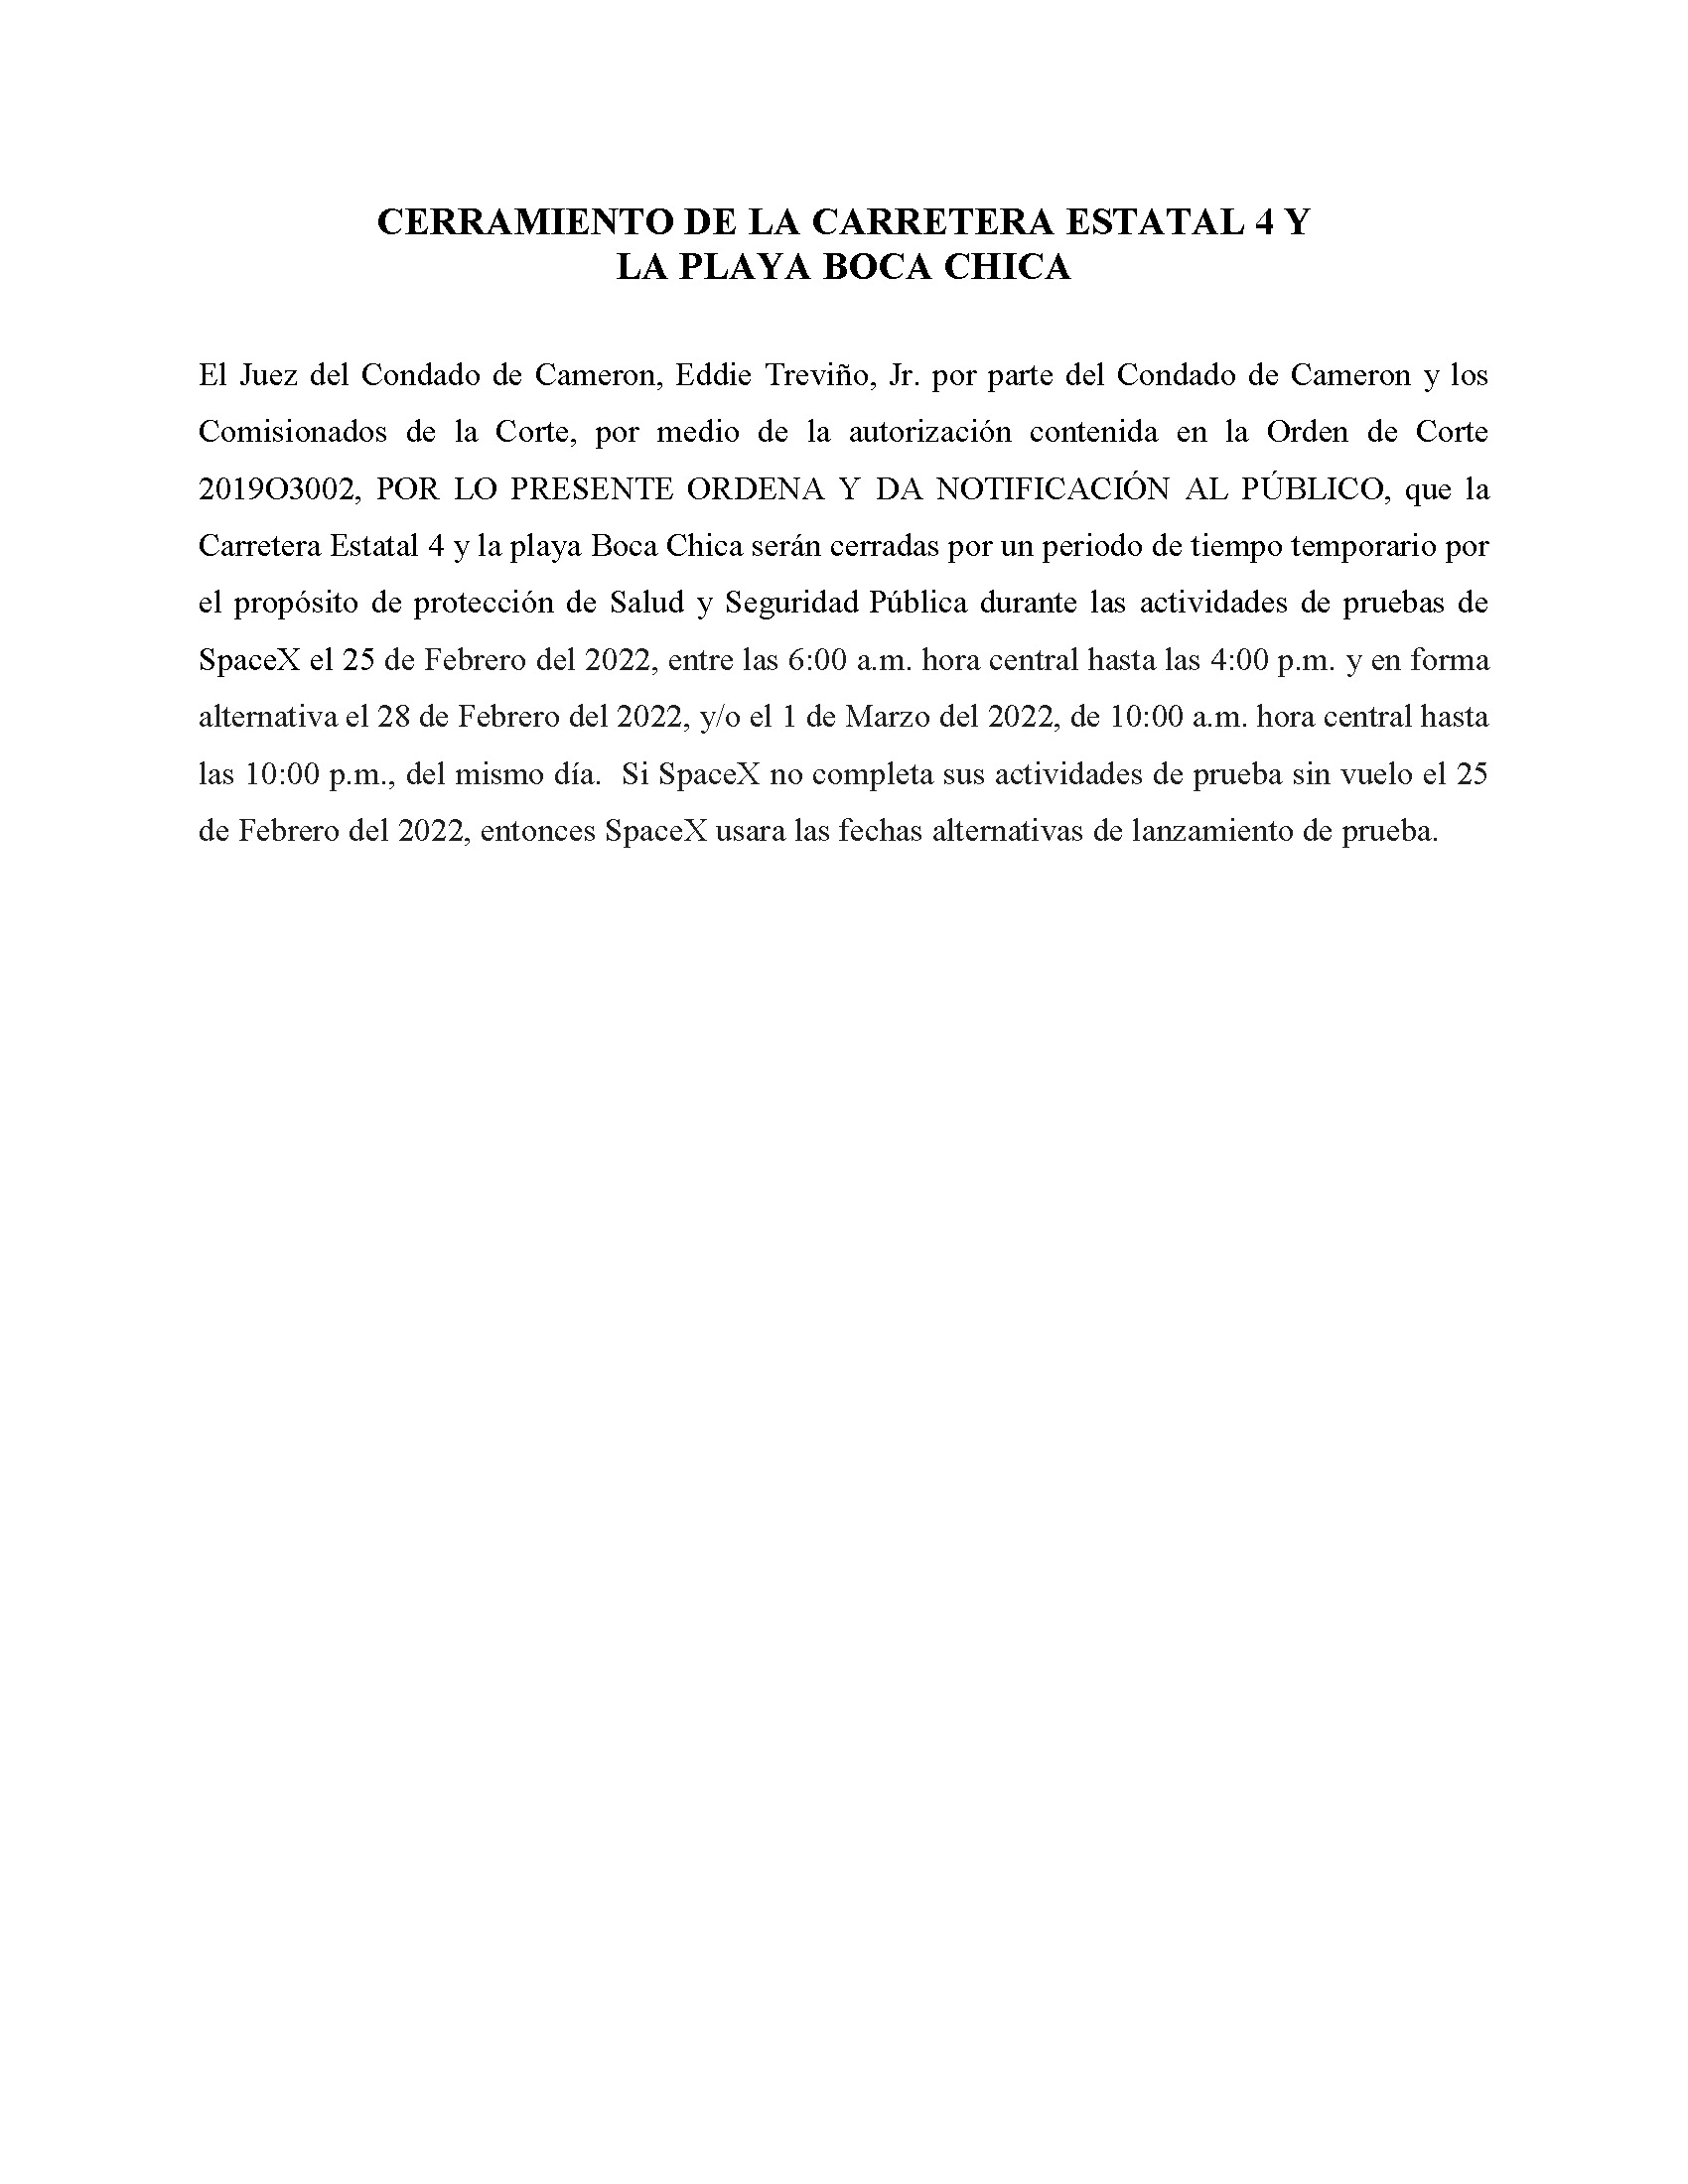 ORDER.CLOSURE OF HIGHWAY 4 Y LA PLAYA BOCA CHICA.SPANISH.02.25.2022